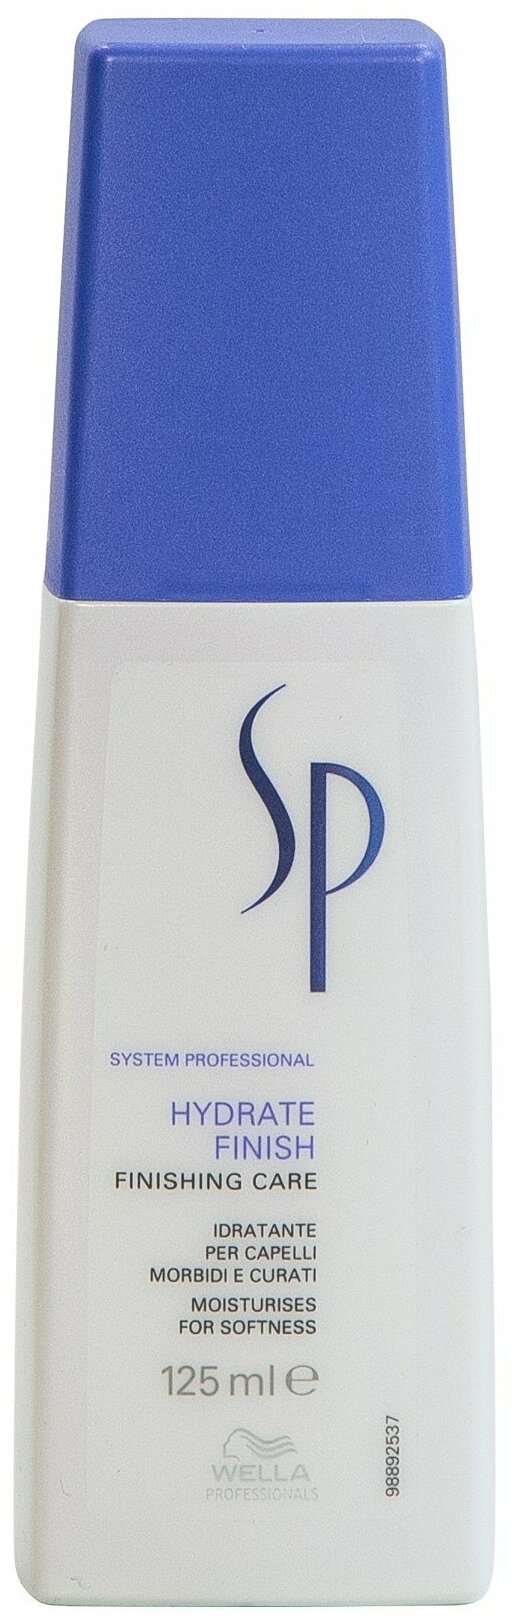 SYSTEM PROFESSIONAL Hydrate Finish Спрей-уход для увлажнения волос, 125 мл, бутылка